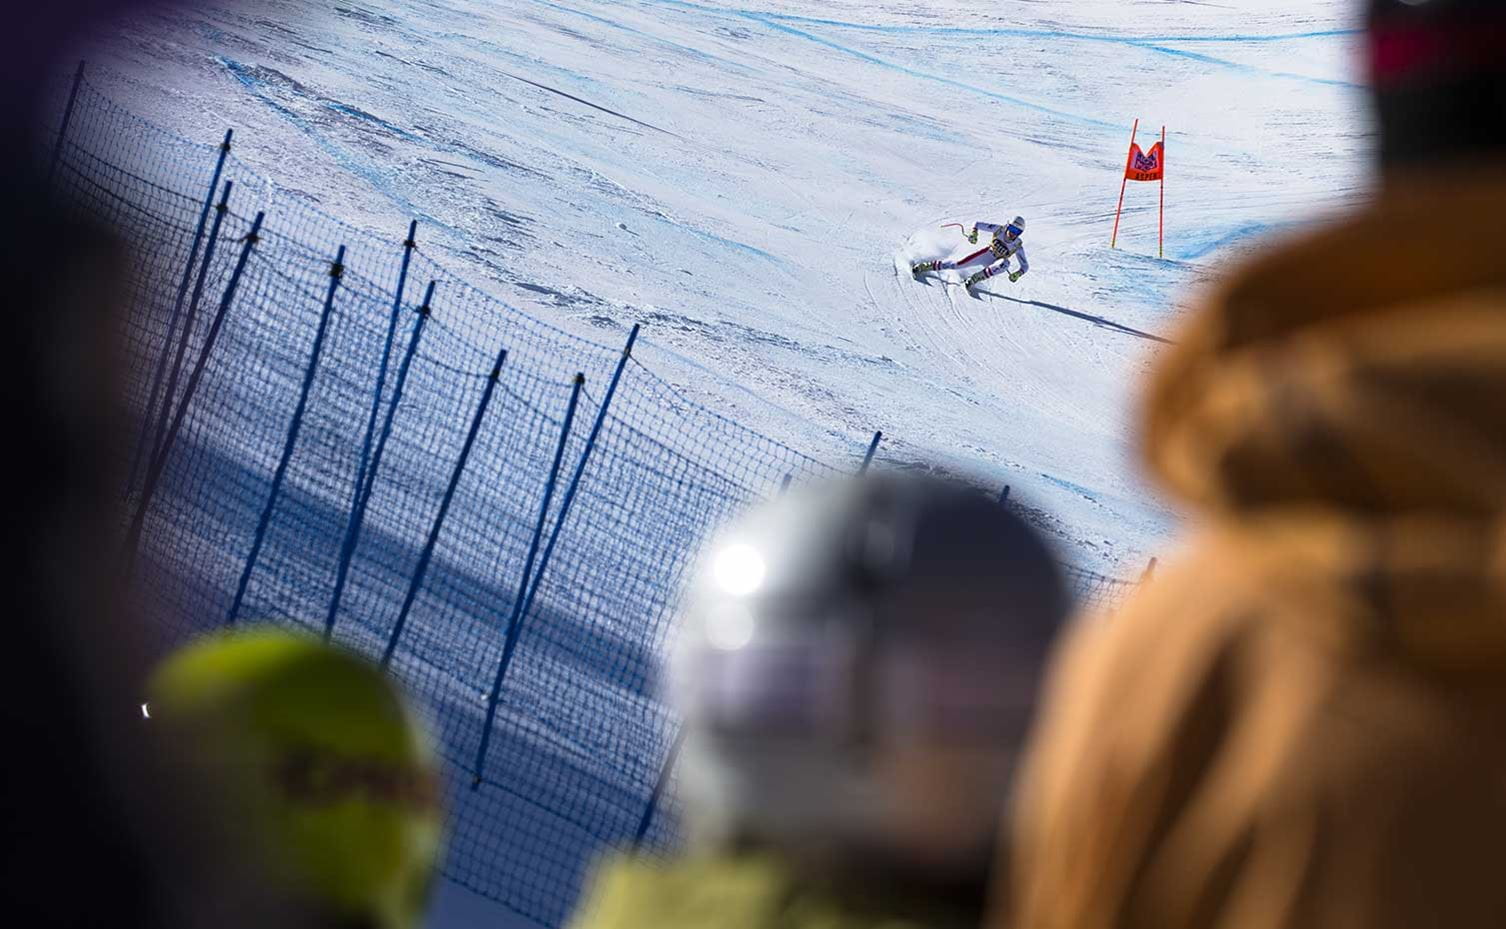 A ski racer descends Aspen Mountain while spectators watch